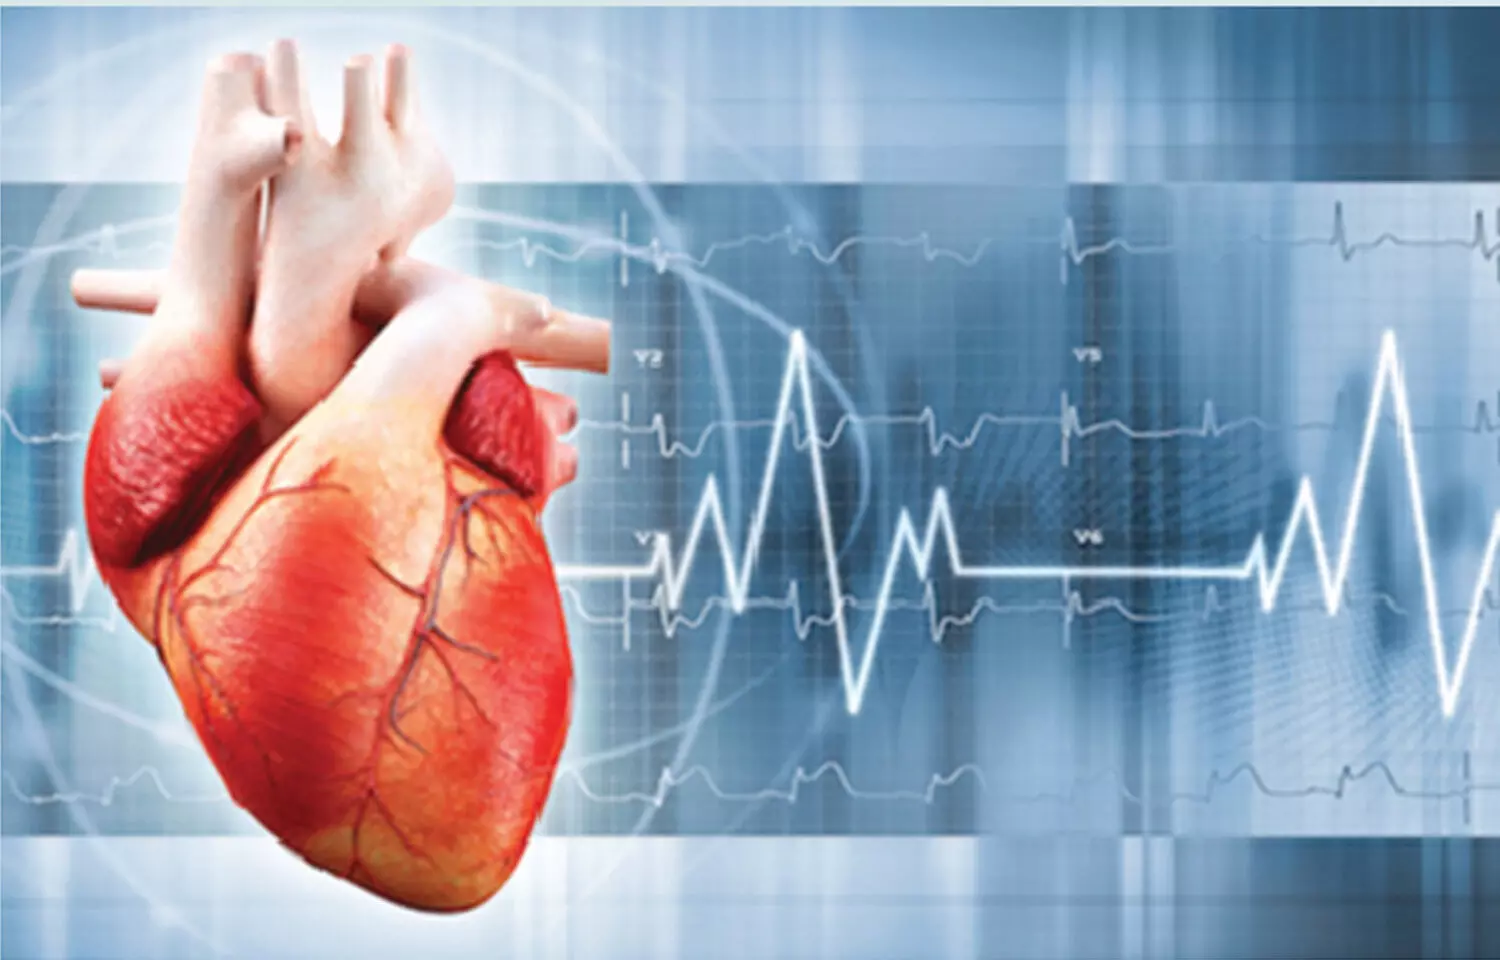 Milrinone no better than dobutamine for treatment of cardiogenic shock: NEJM